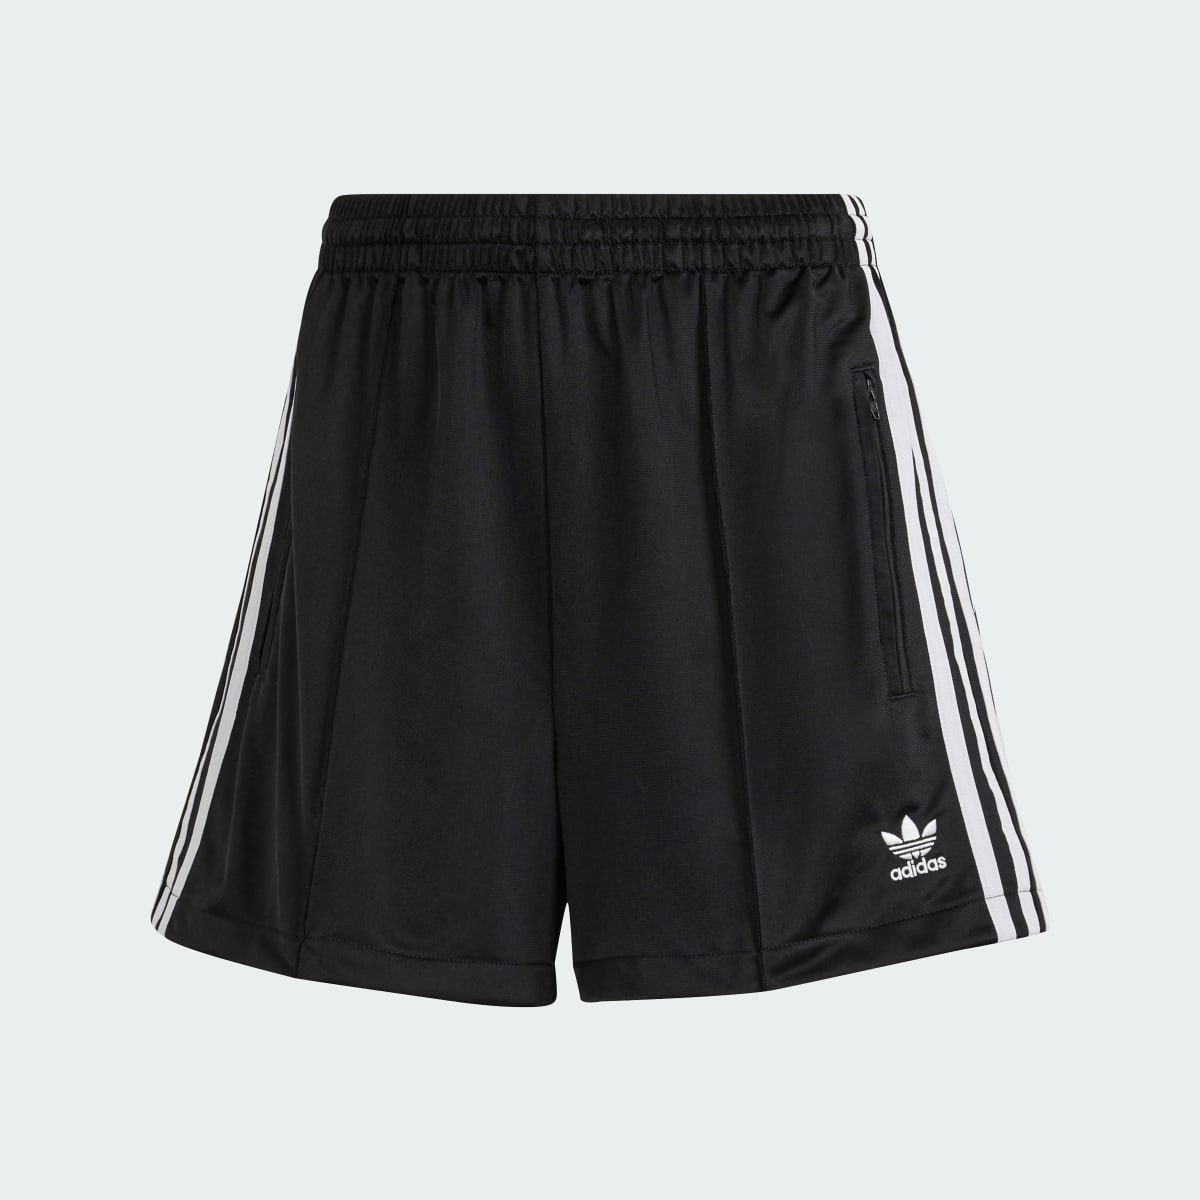 Adidas Firebird Shorts. 4